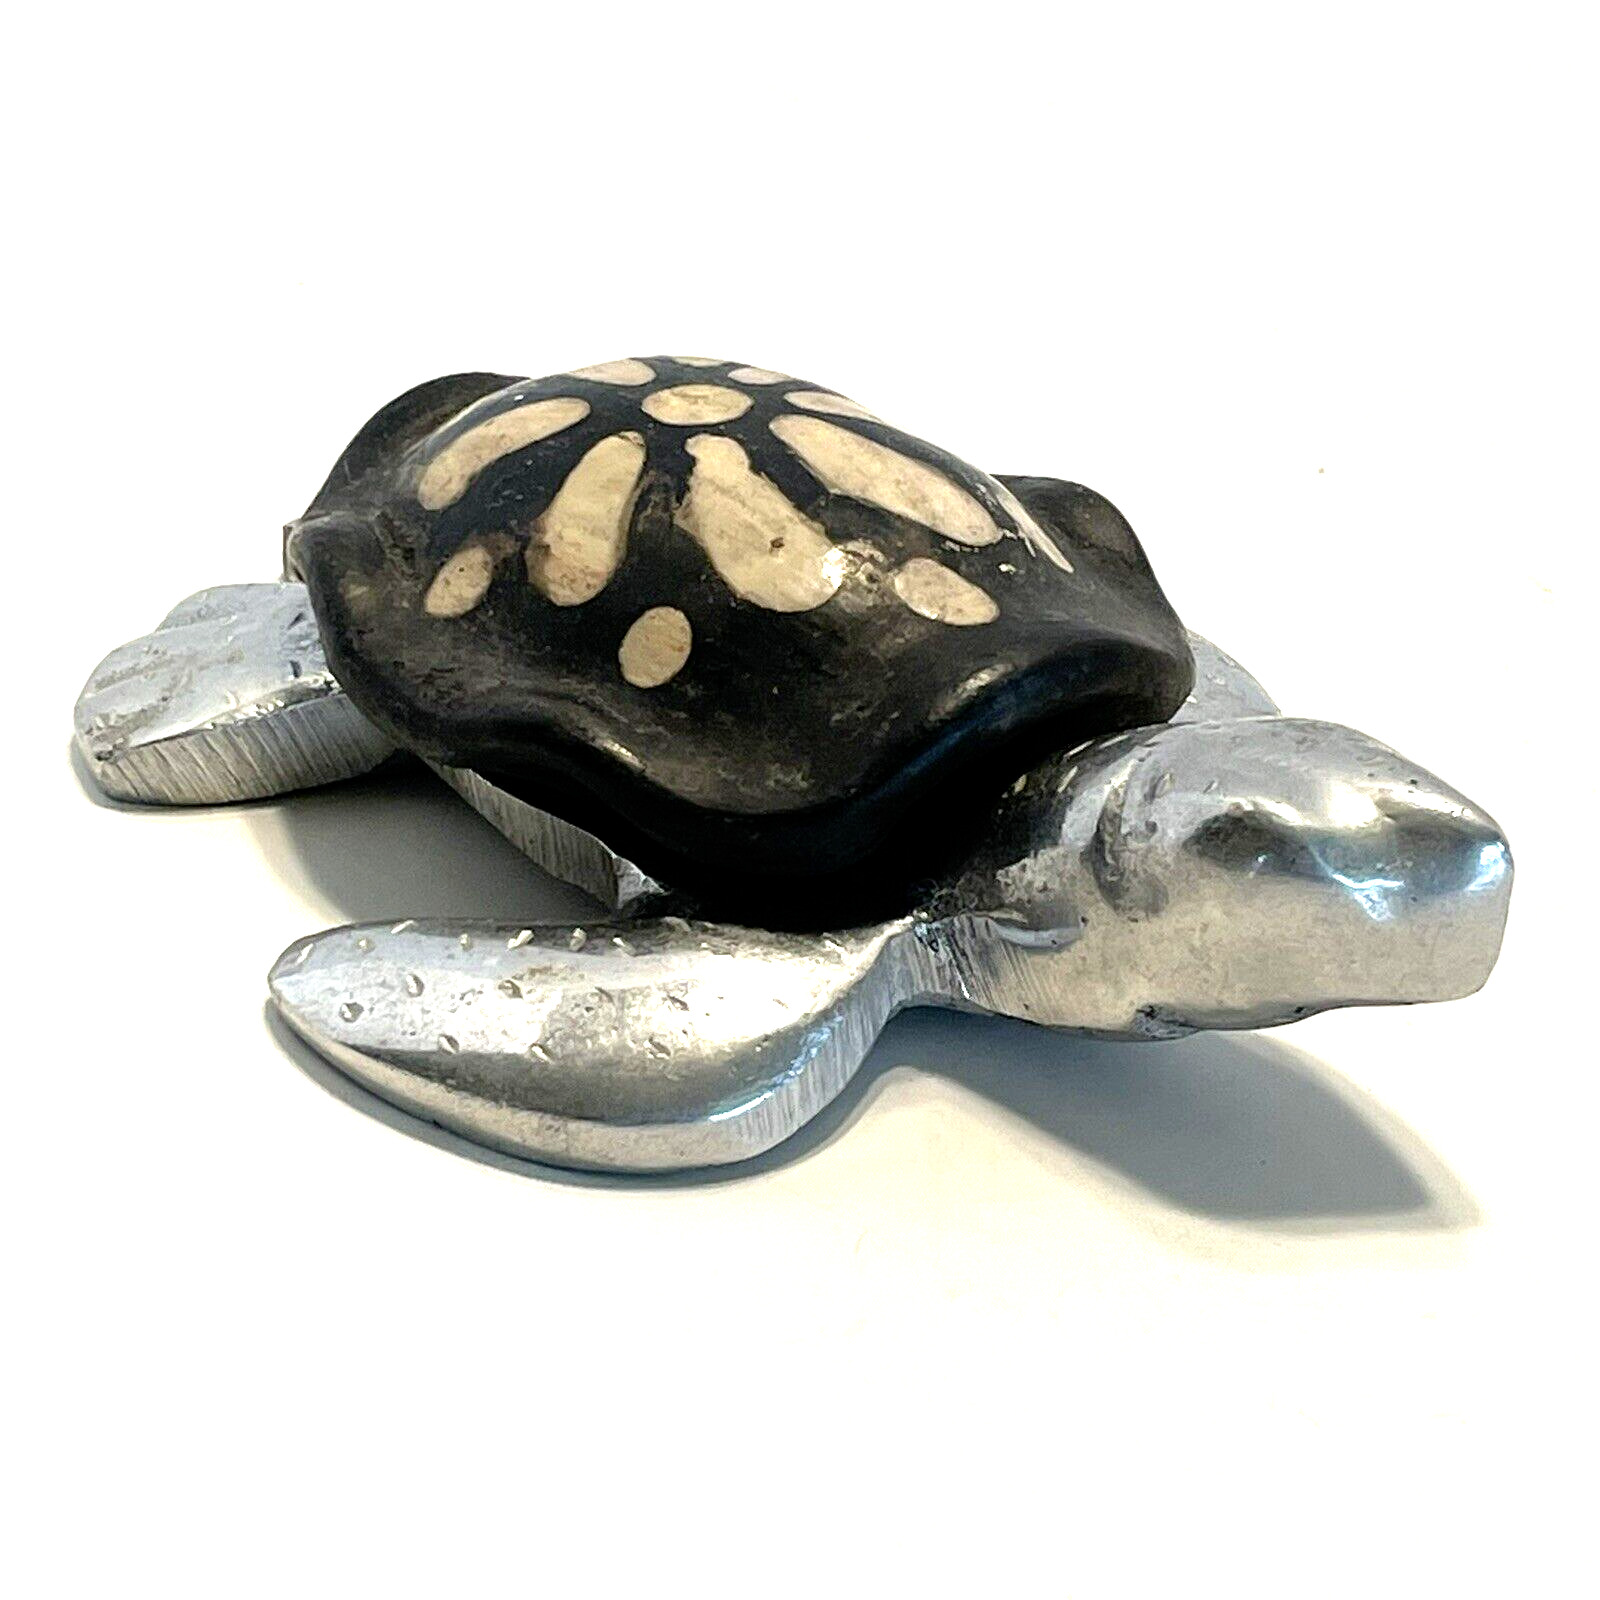 Vintage Turtle Figurine Silver Toned Metal & Ceramic Made in Honduras Dona Flora